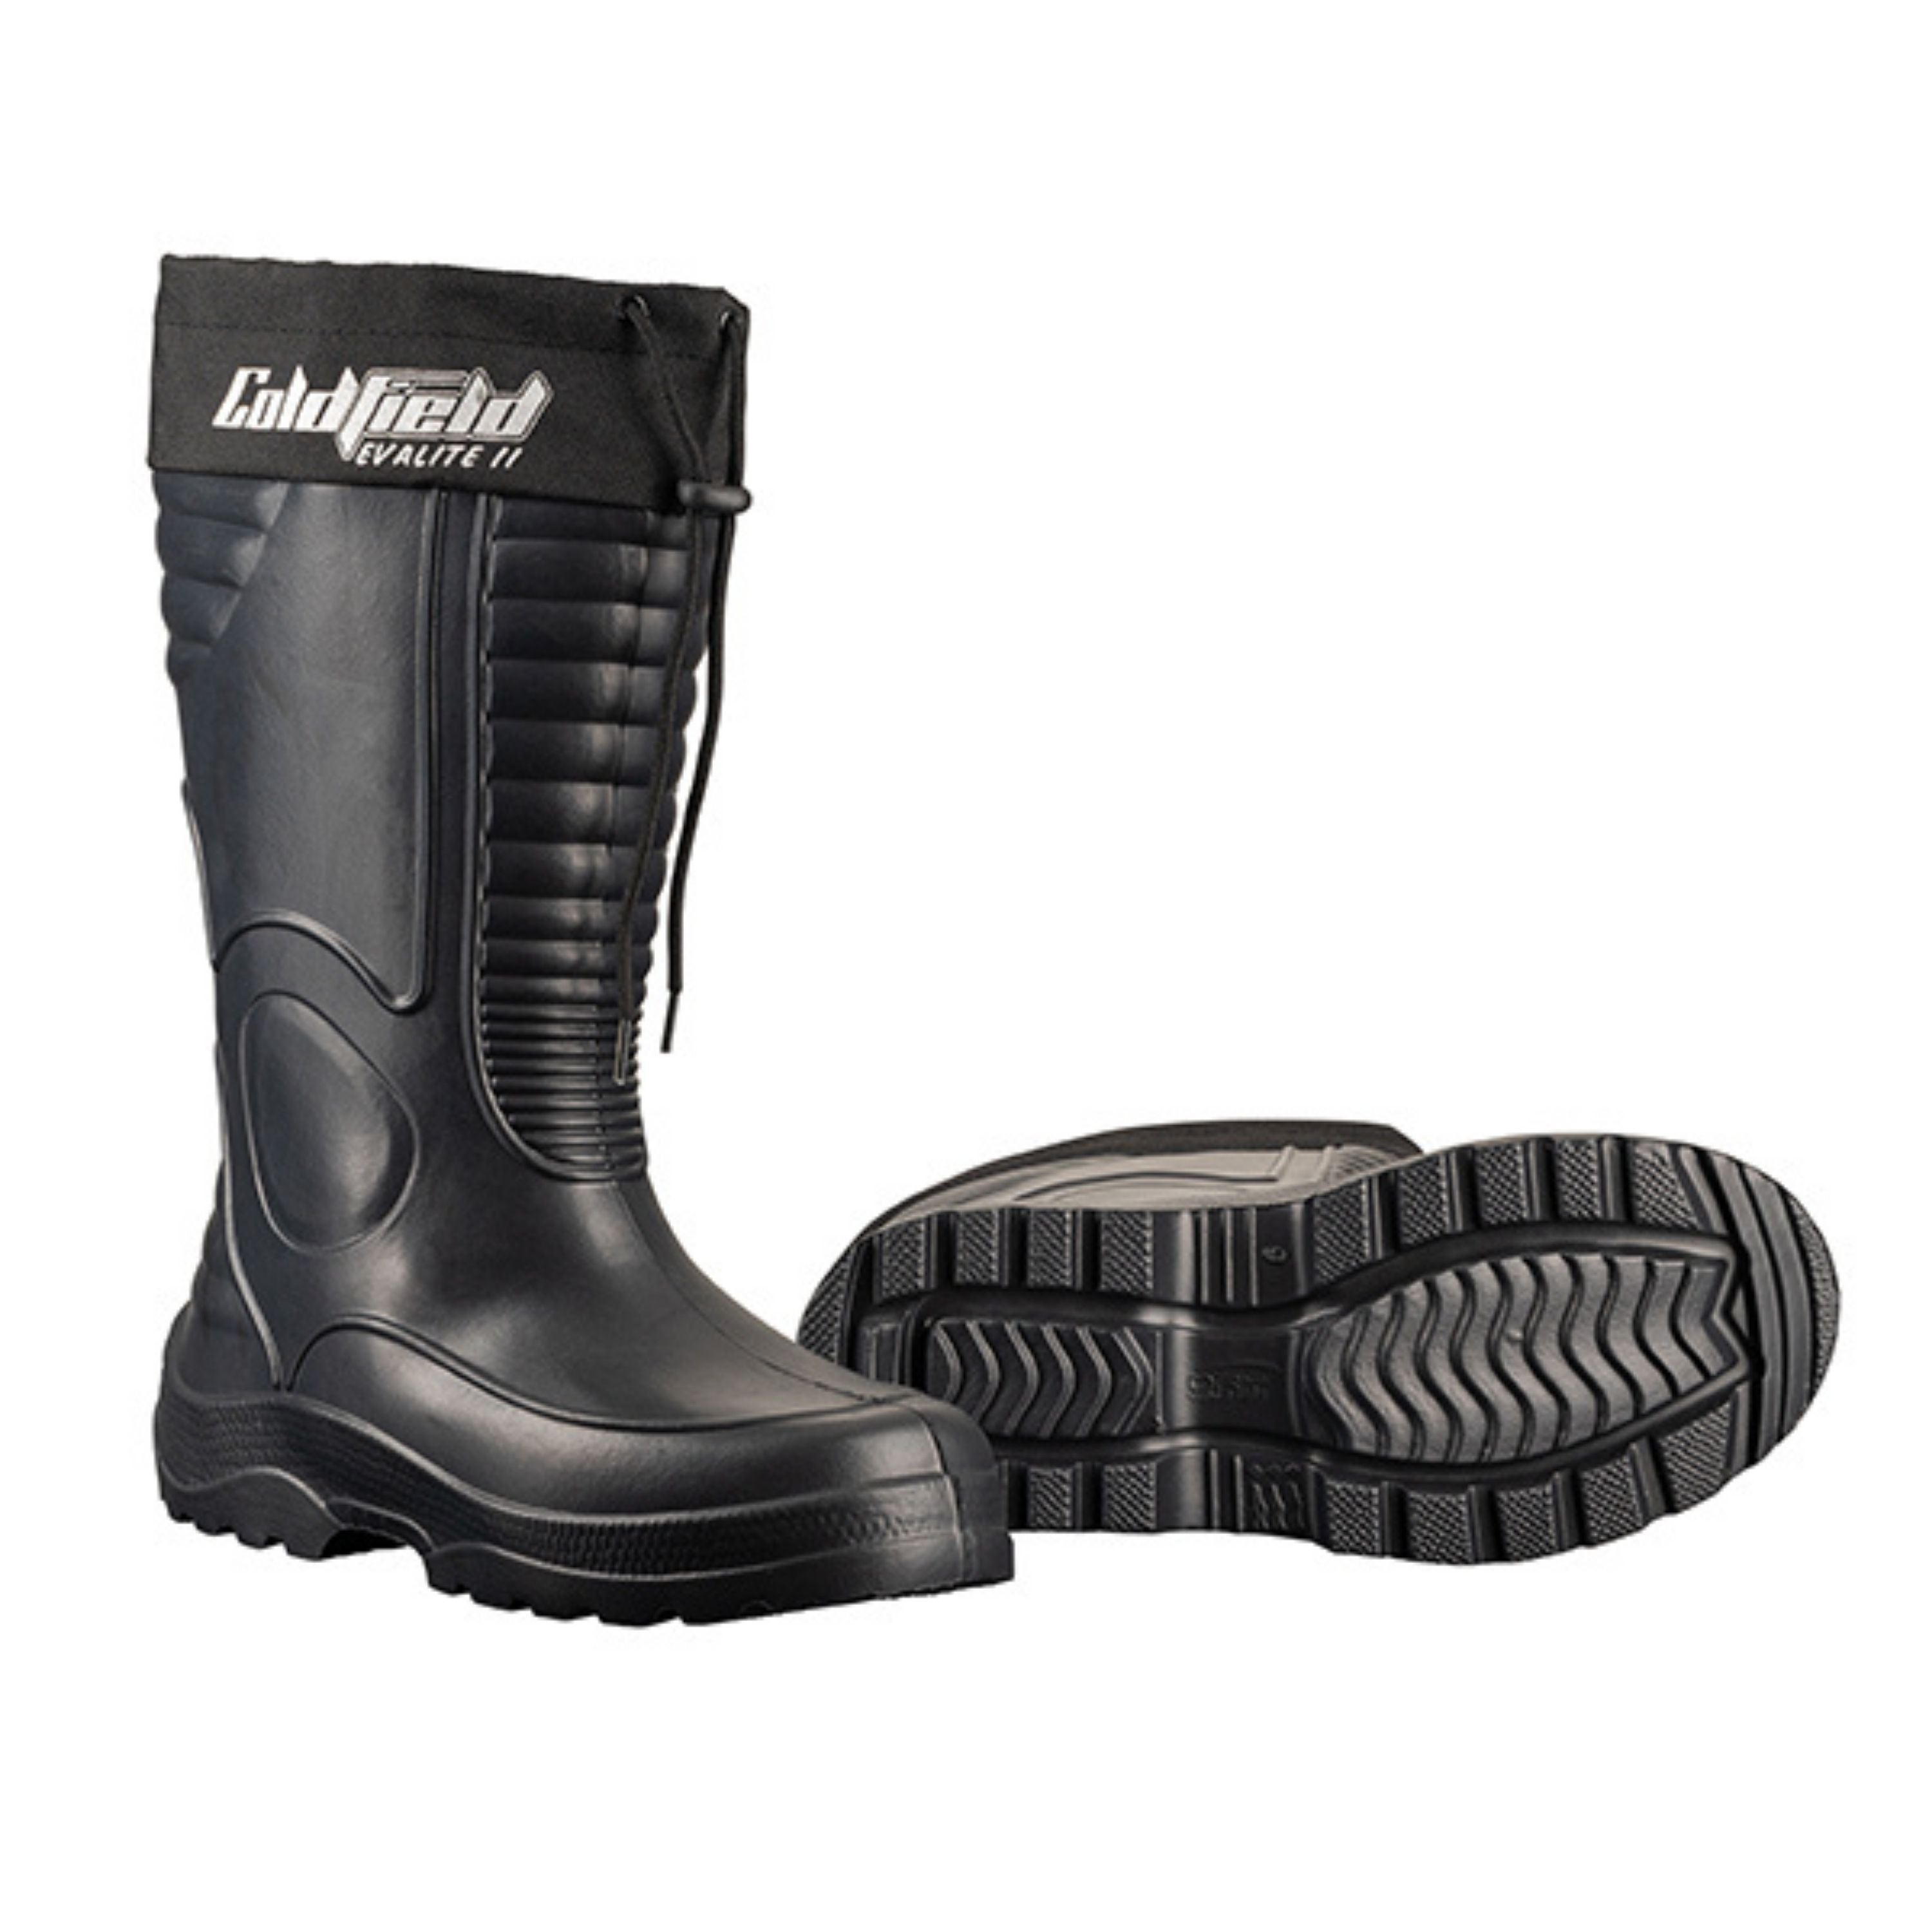 "Evalite II" Insulated boots - Men's